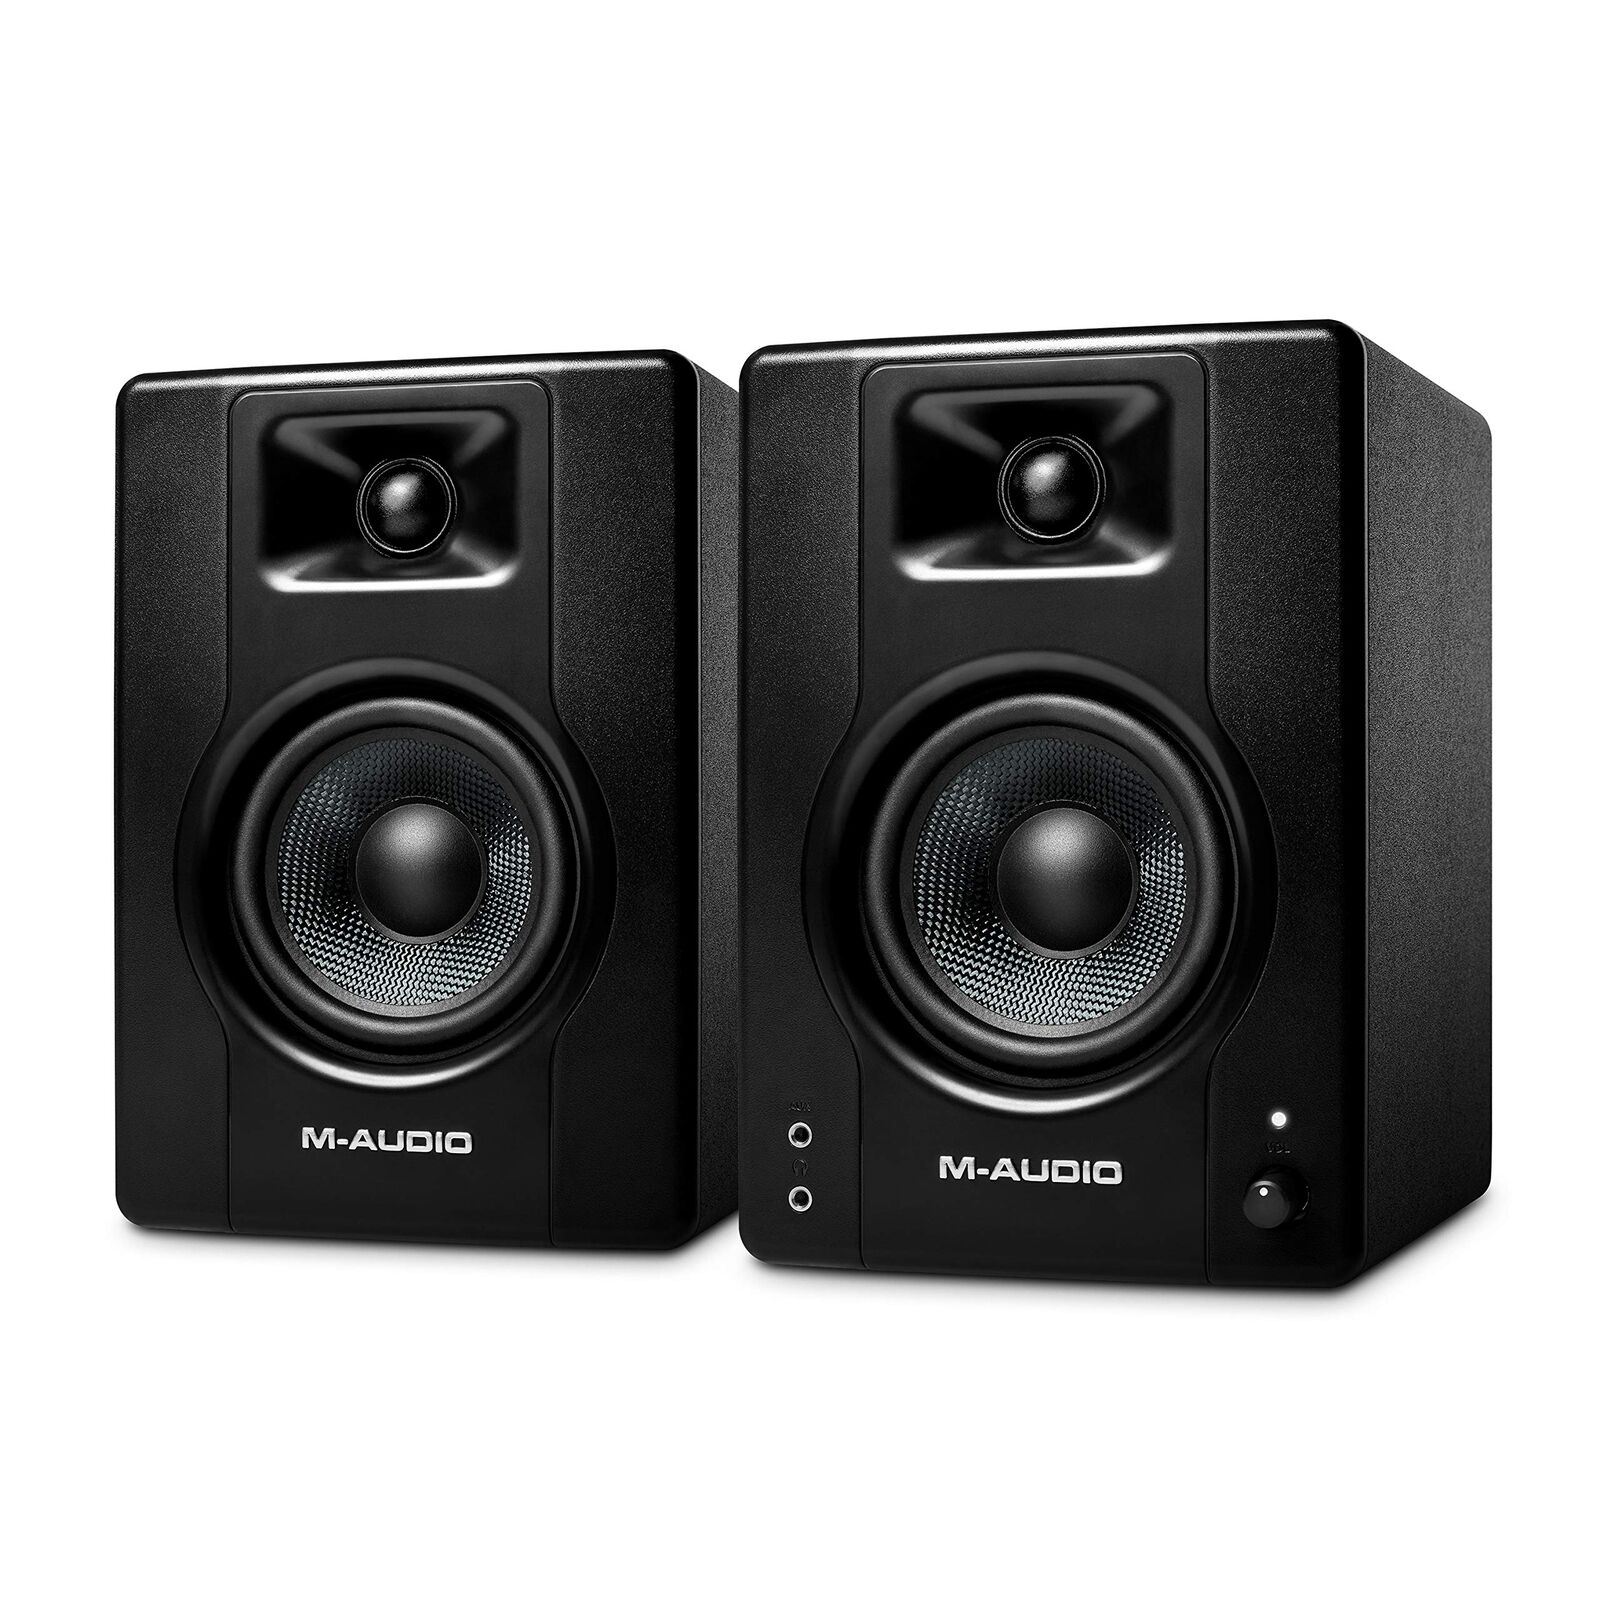 M-Audio monitor speaker large active speaker 120W 4 inch BX4